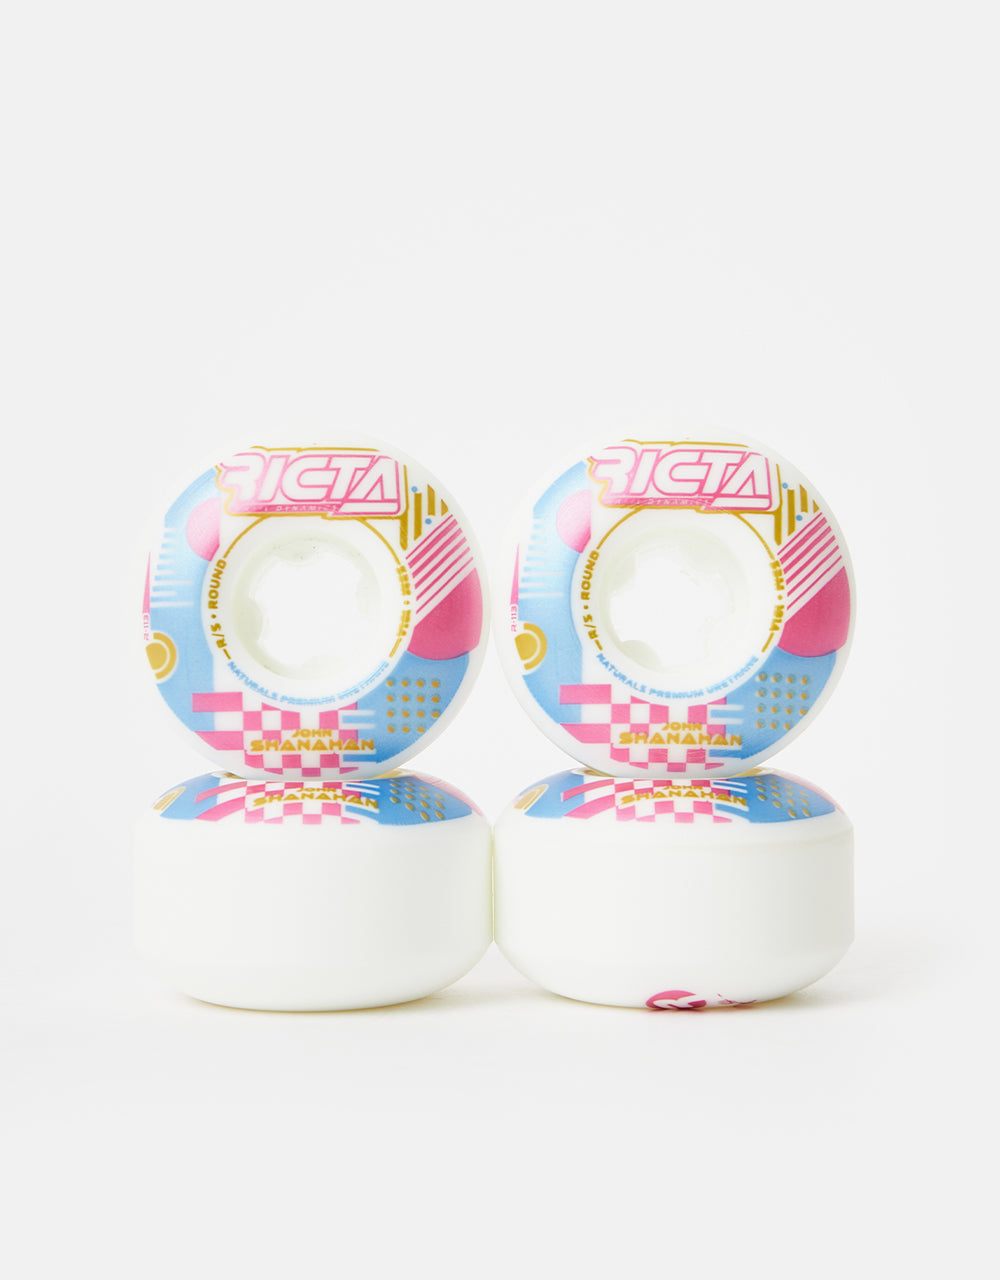 Ricta Shanahan Flux Naturals Round 101a Skateboard Wheels - 53mm